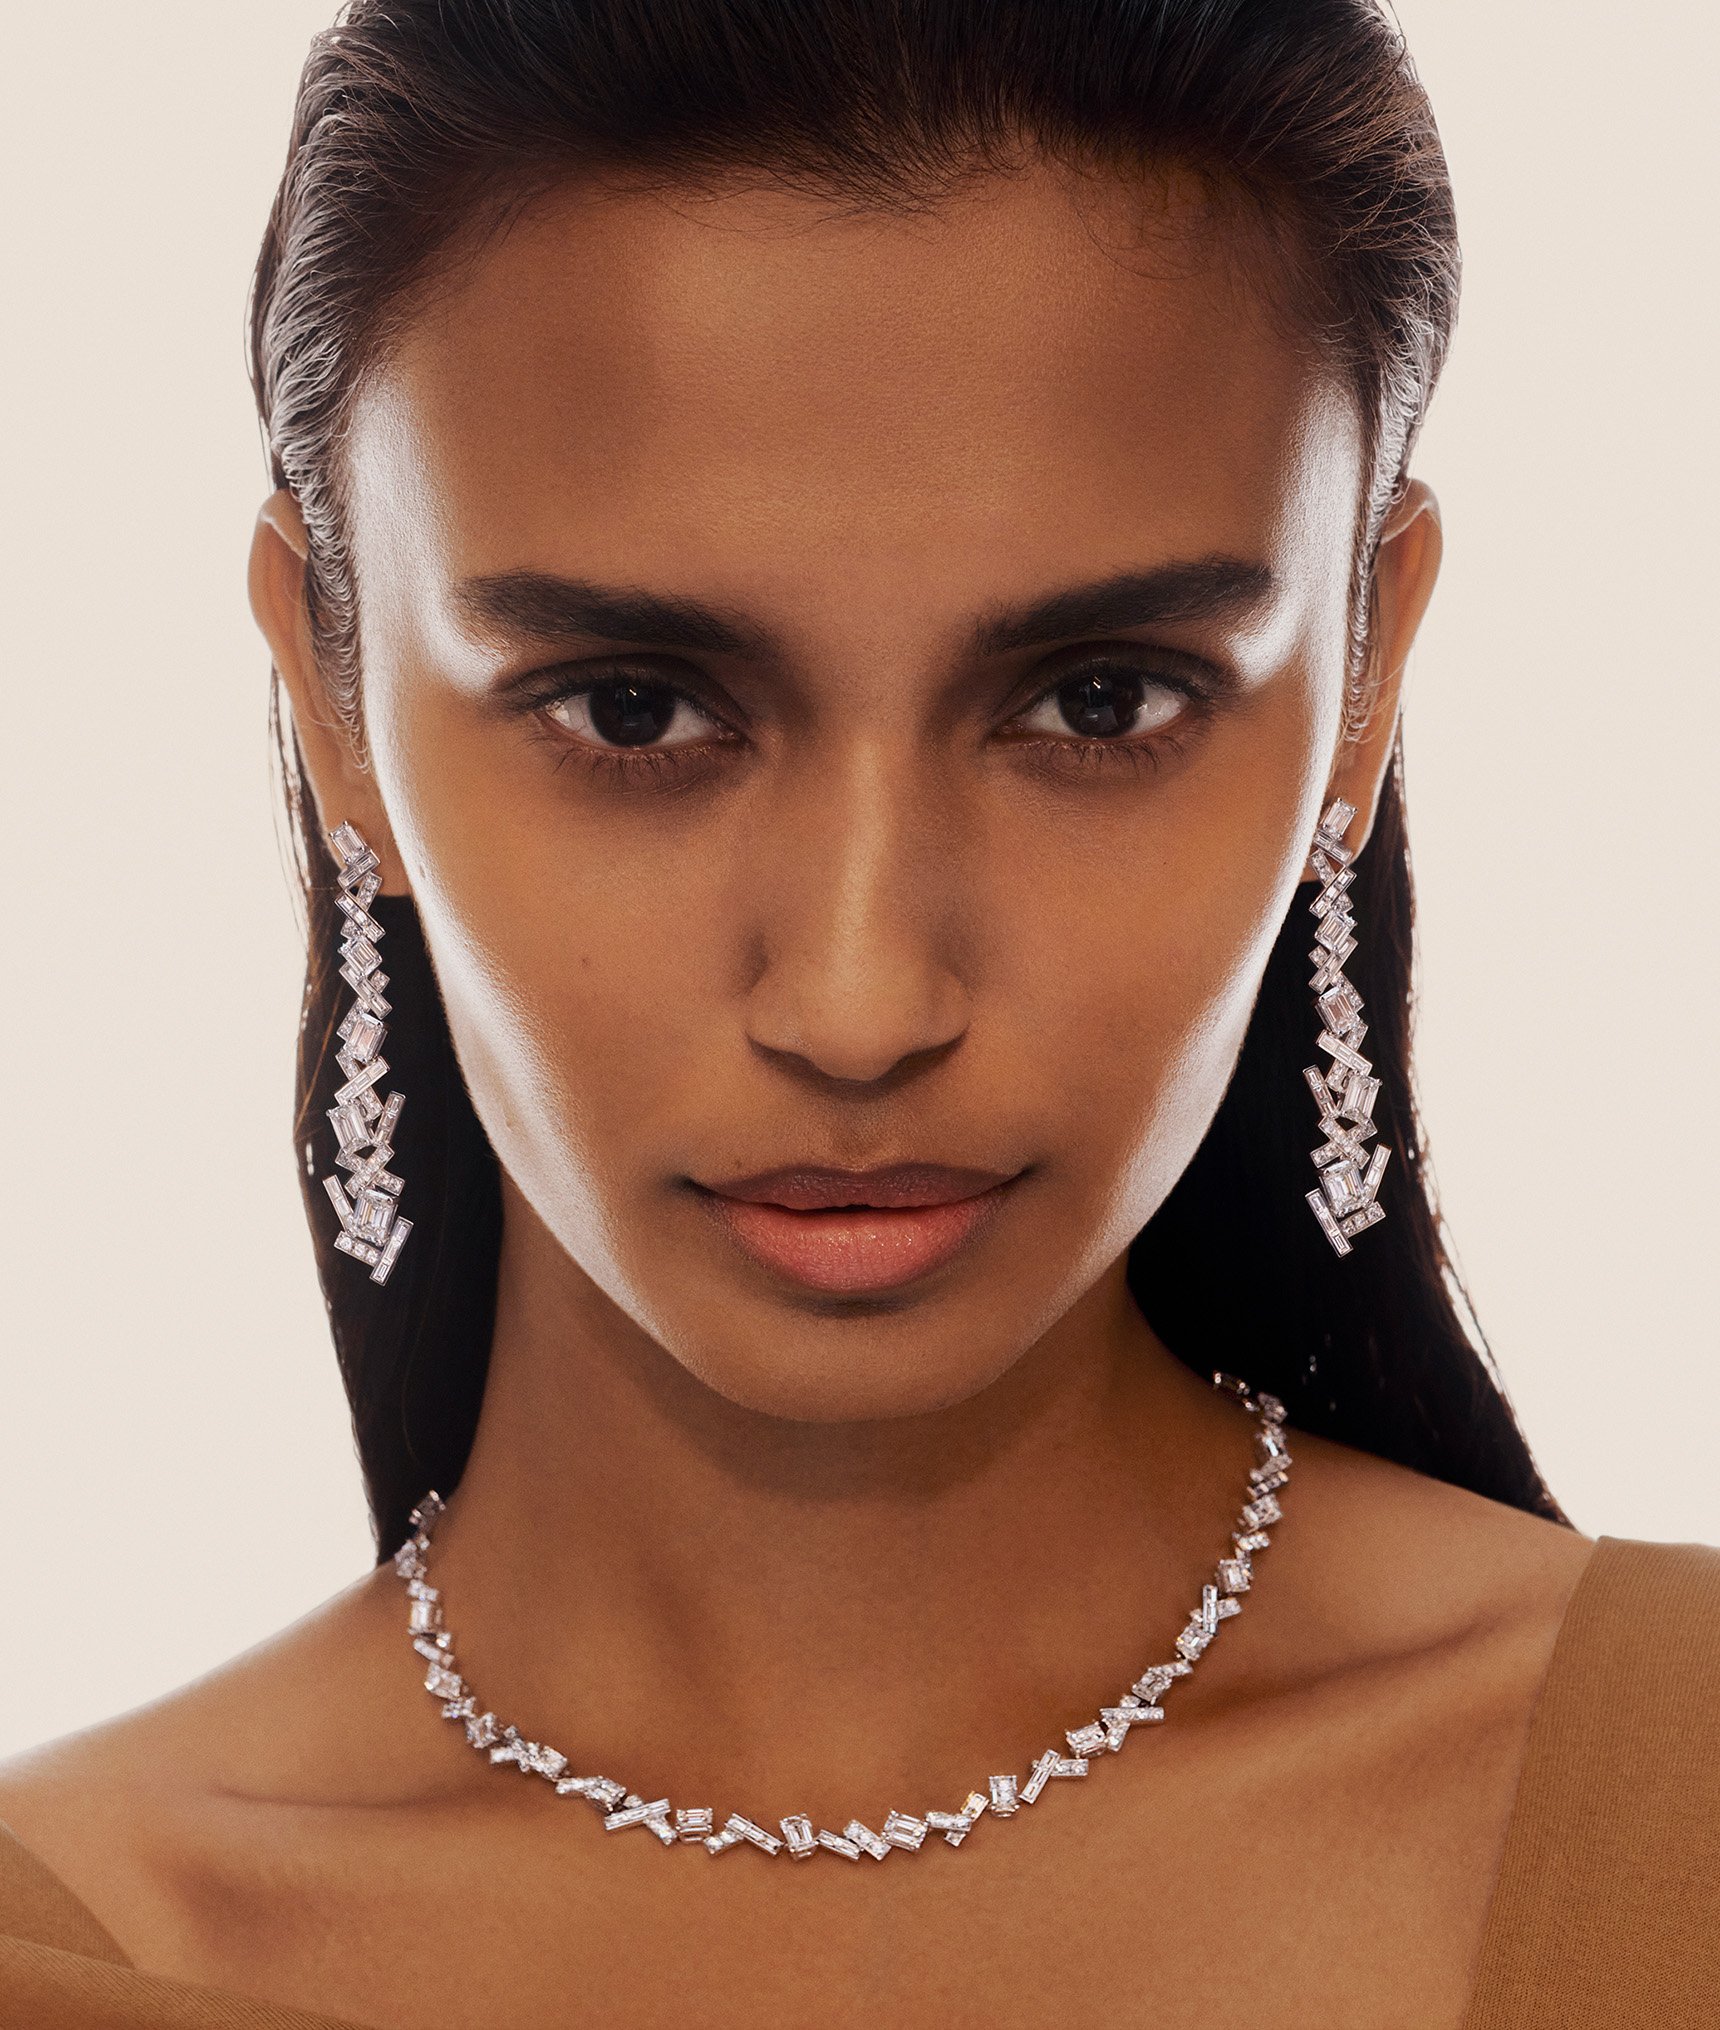 Models wear Graff Threads jewellery collection diamond jewellery